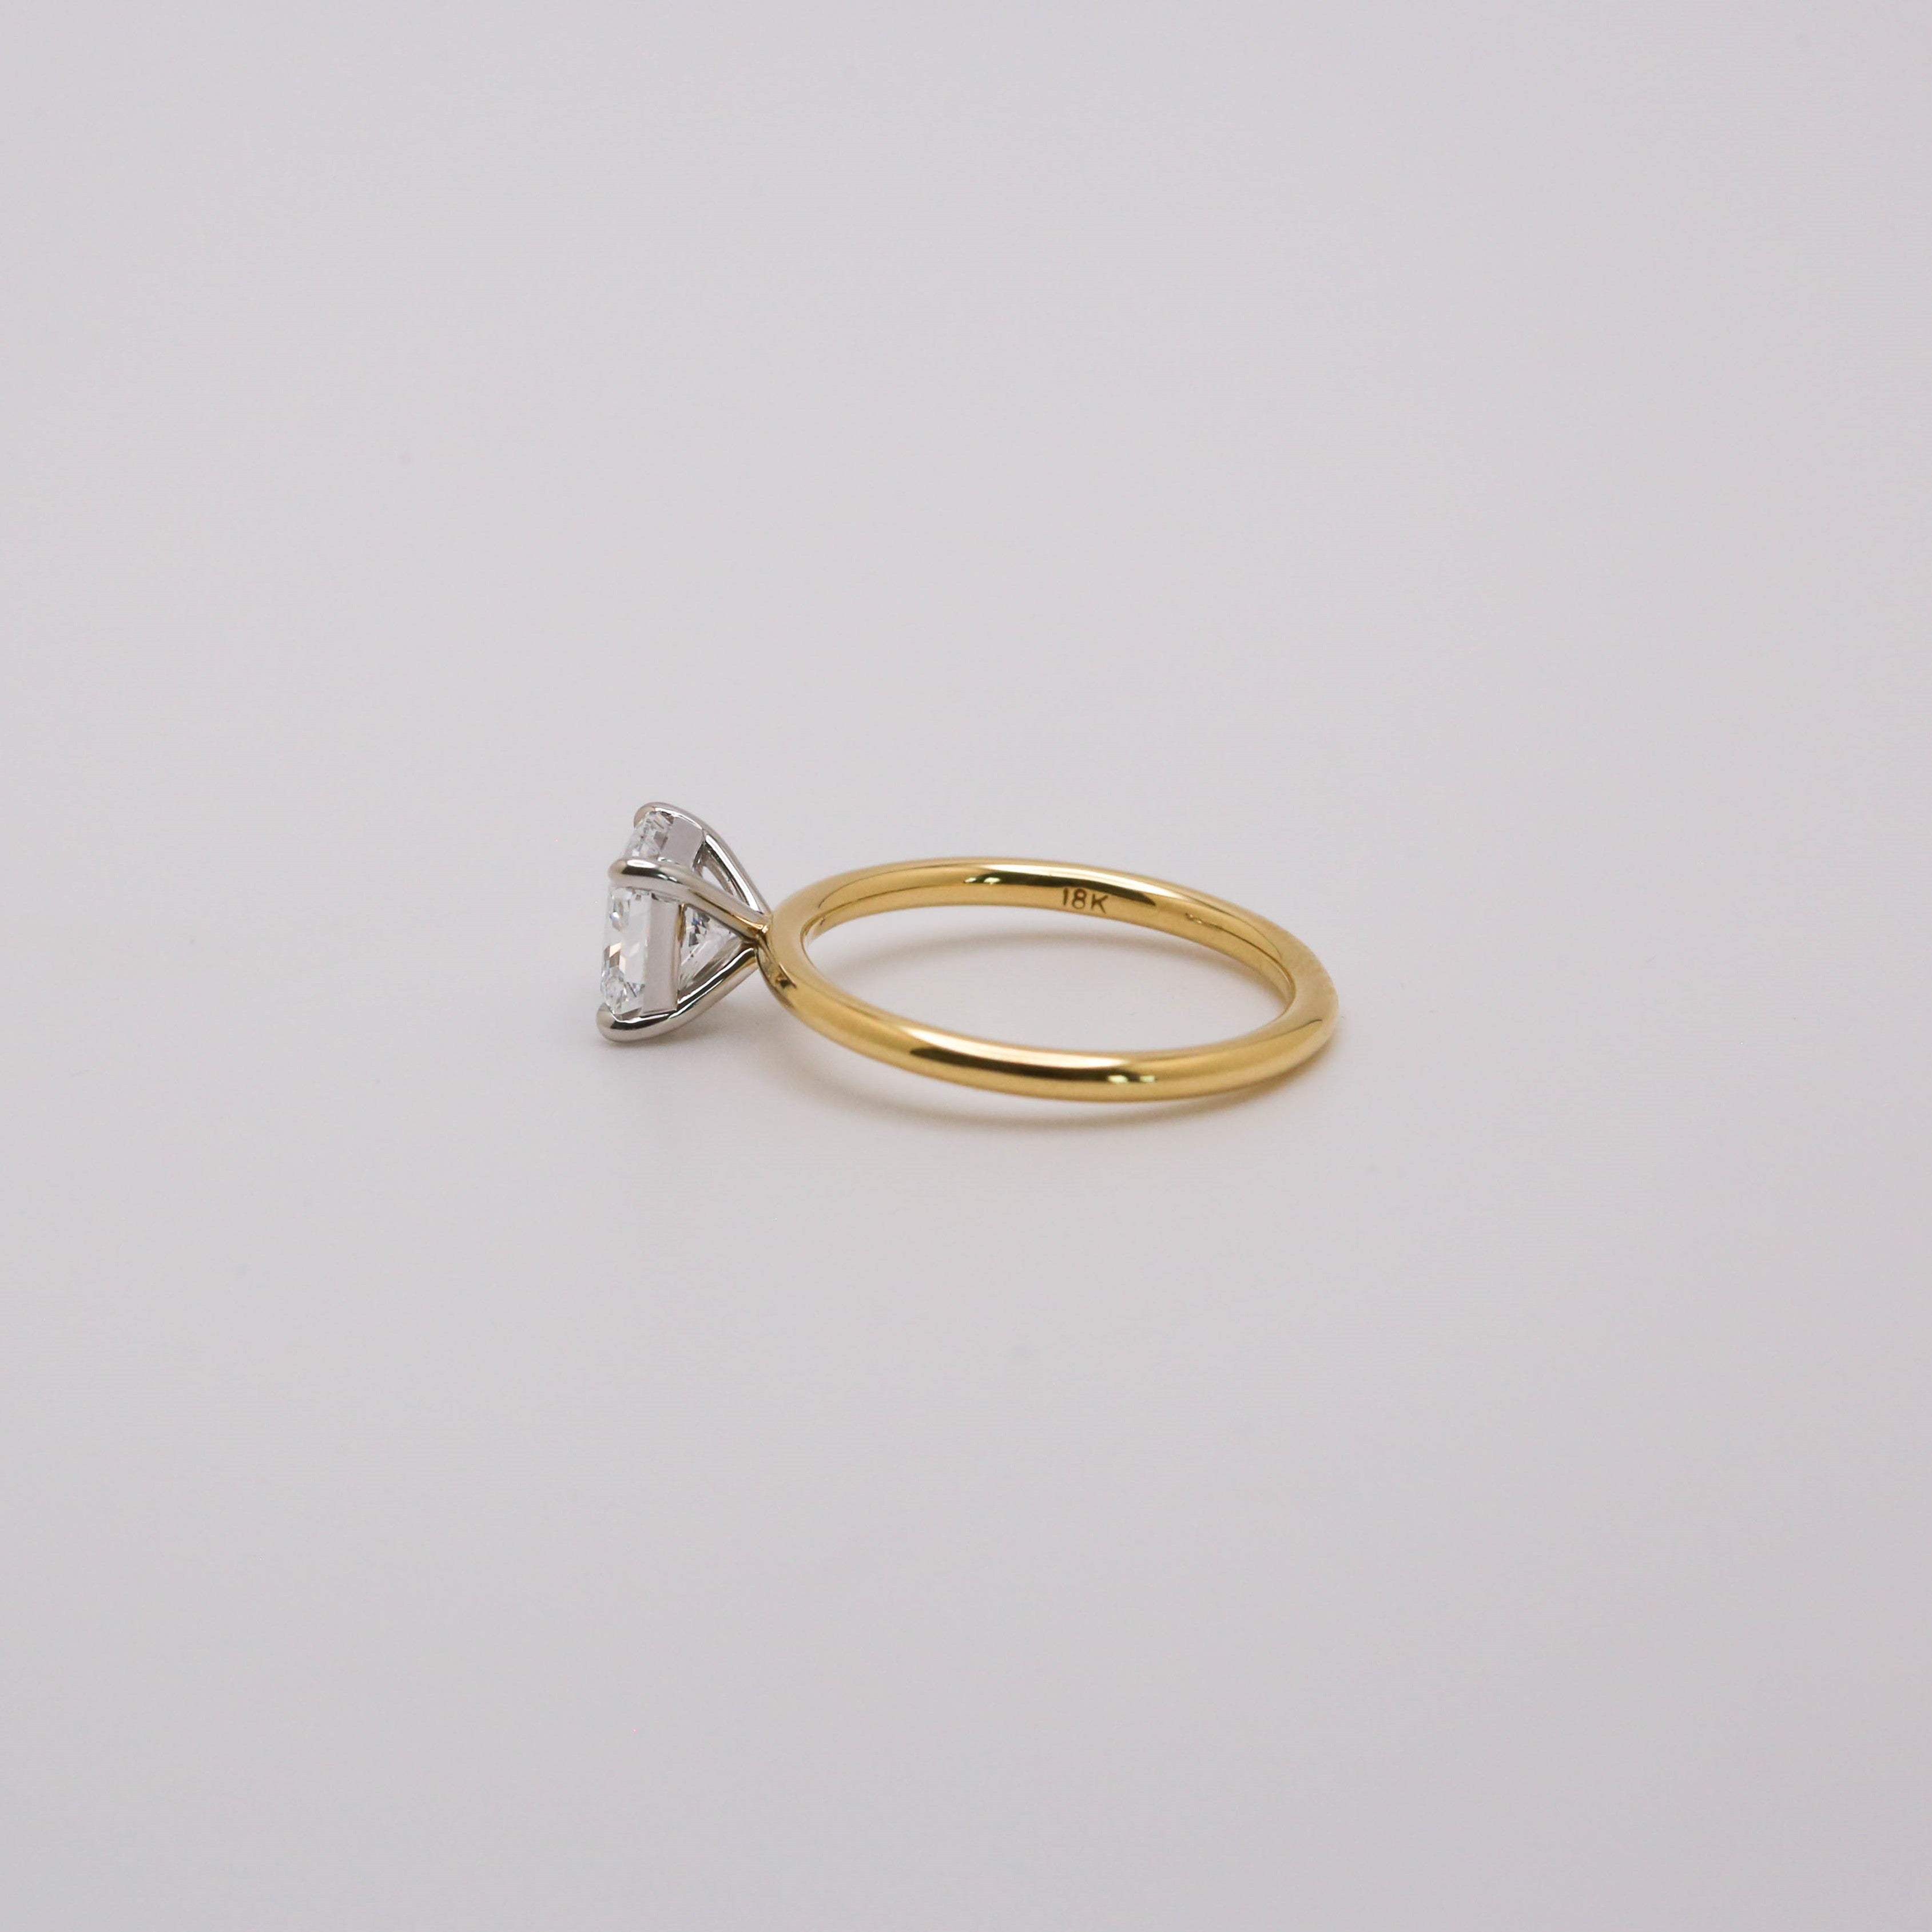 2 tone radiant cut lab diamond engagement ring